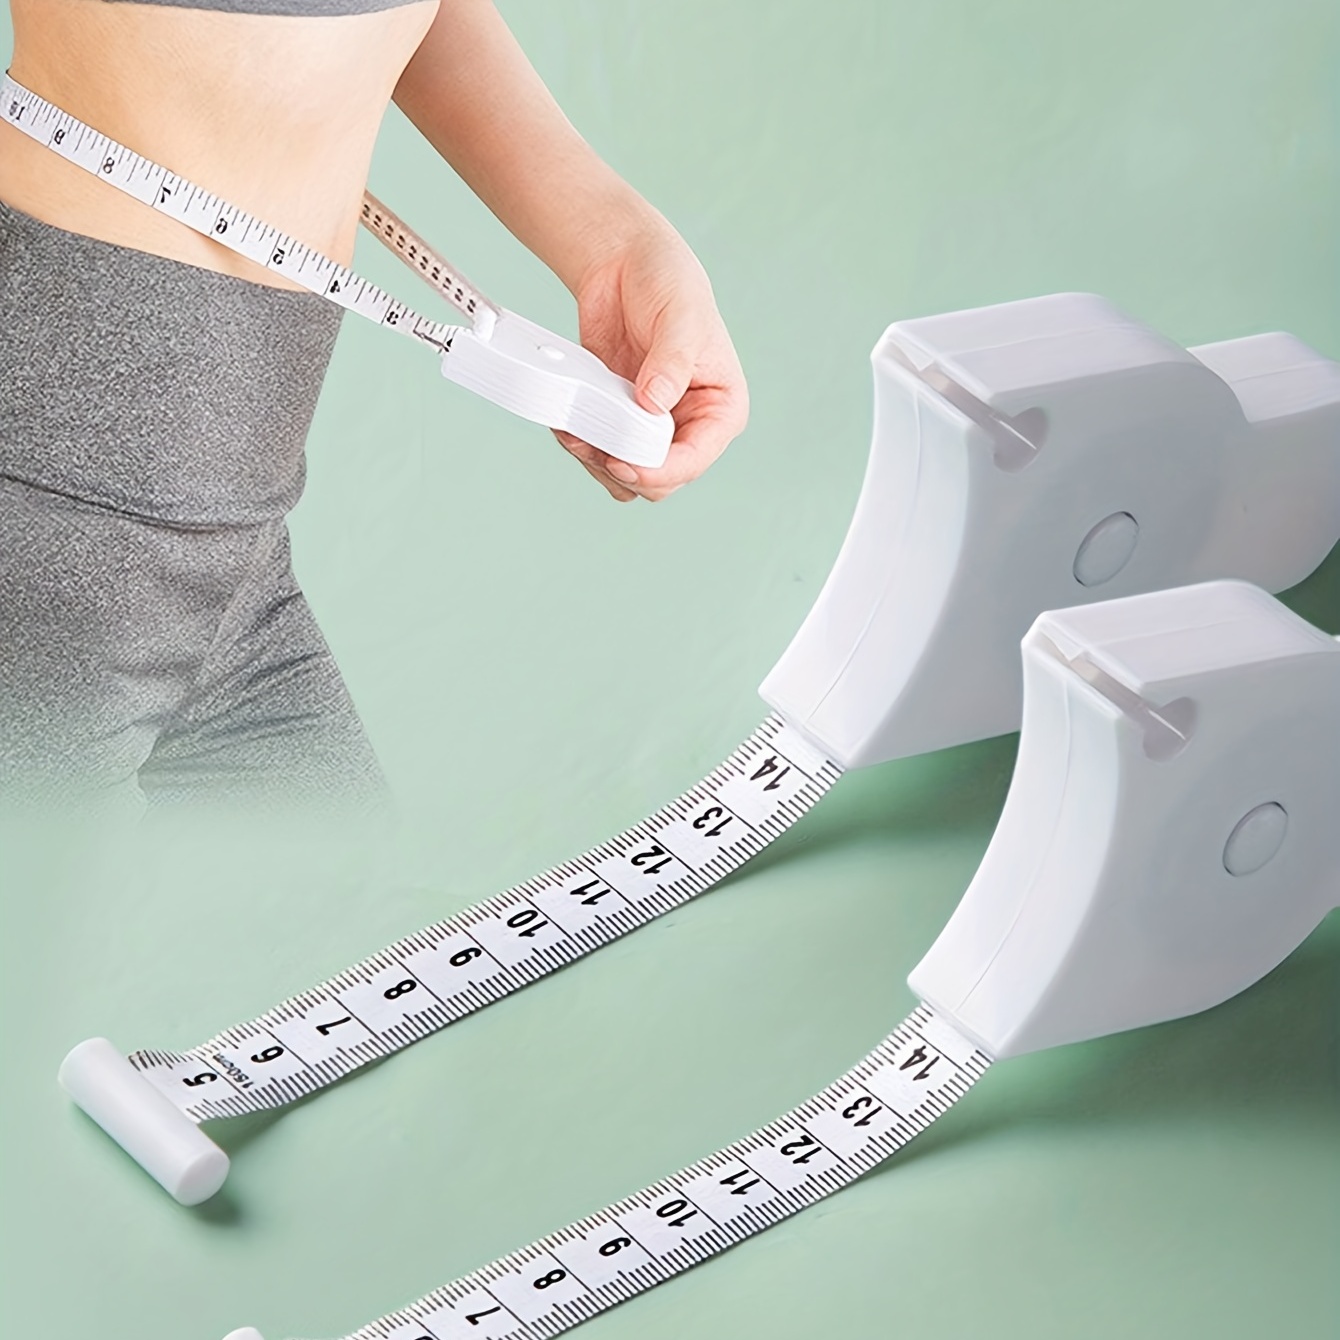 Self-tightening Body Measuring Tape Ruler 150cm/60inch Accurate Fitness  Caliper Measuring Body Tape Measure